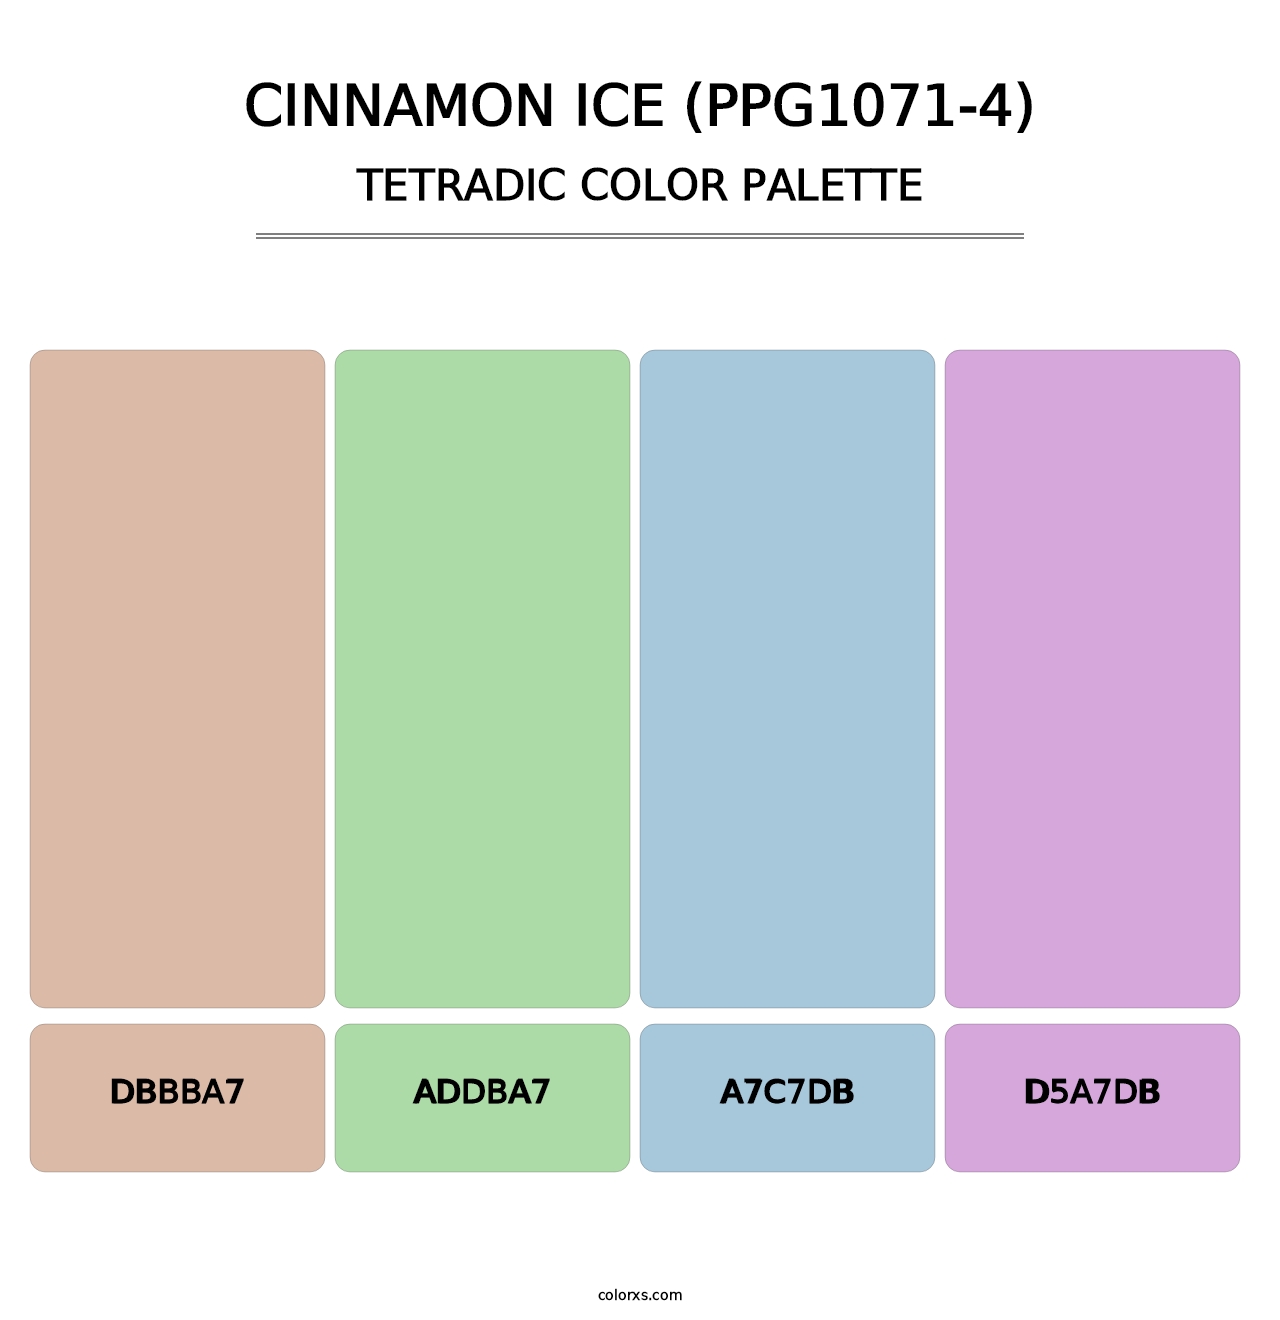 Cinnamon Ice (PPG1071-4) - Tetradic Color Palette